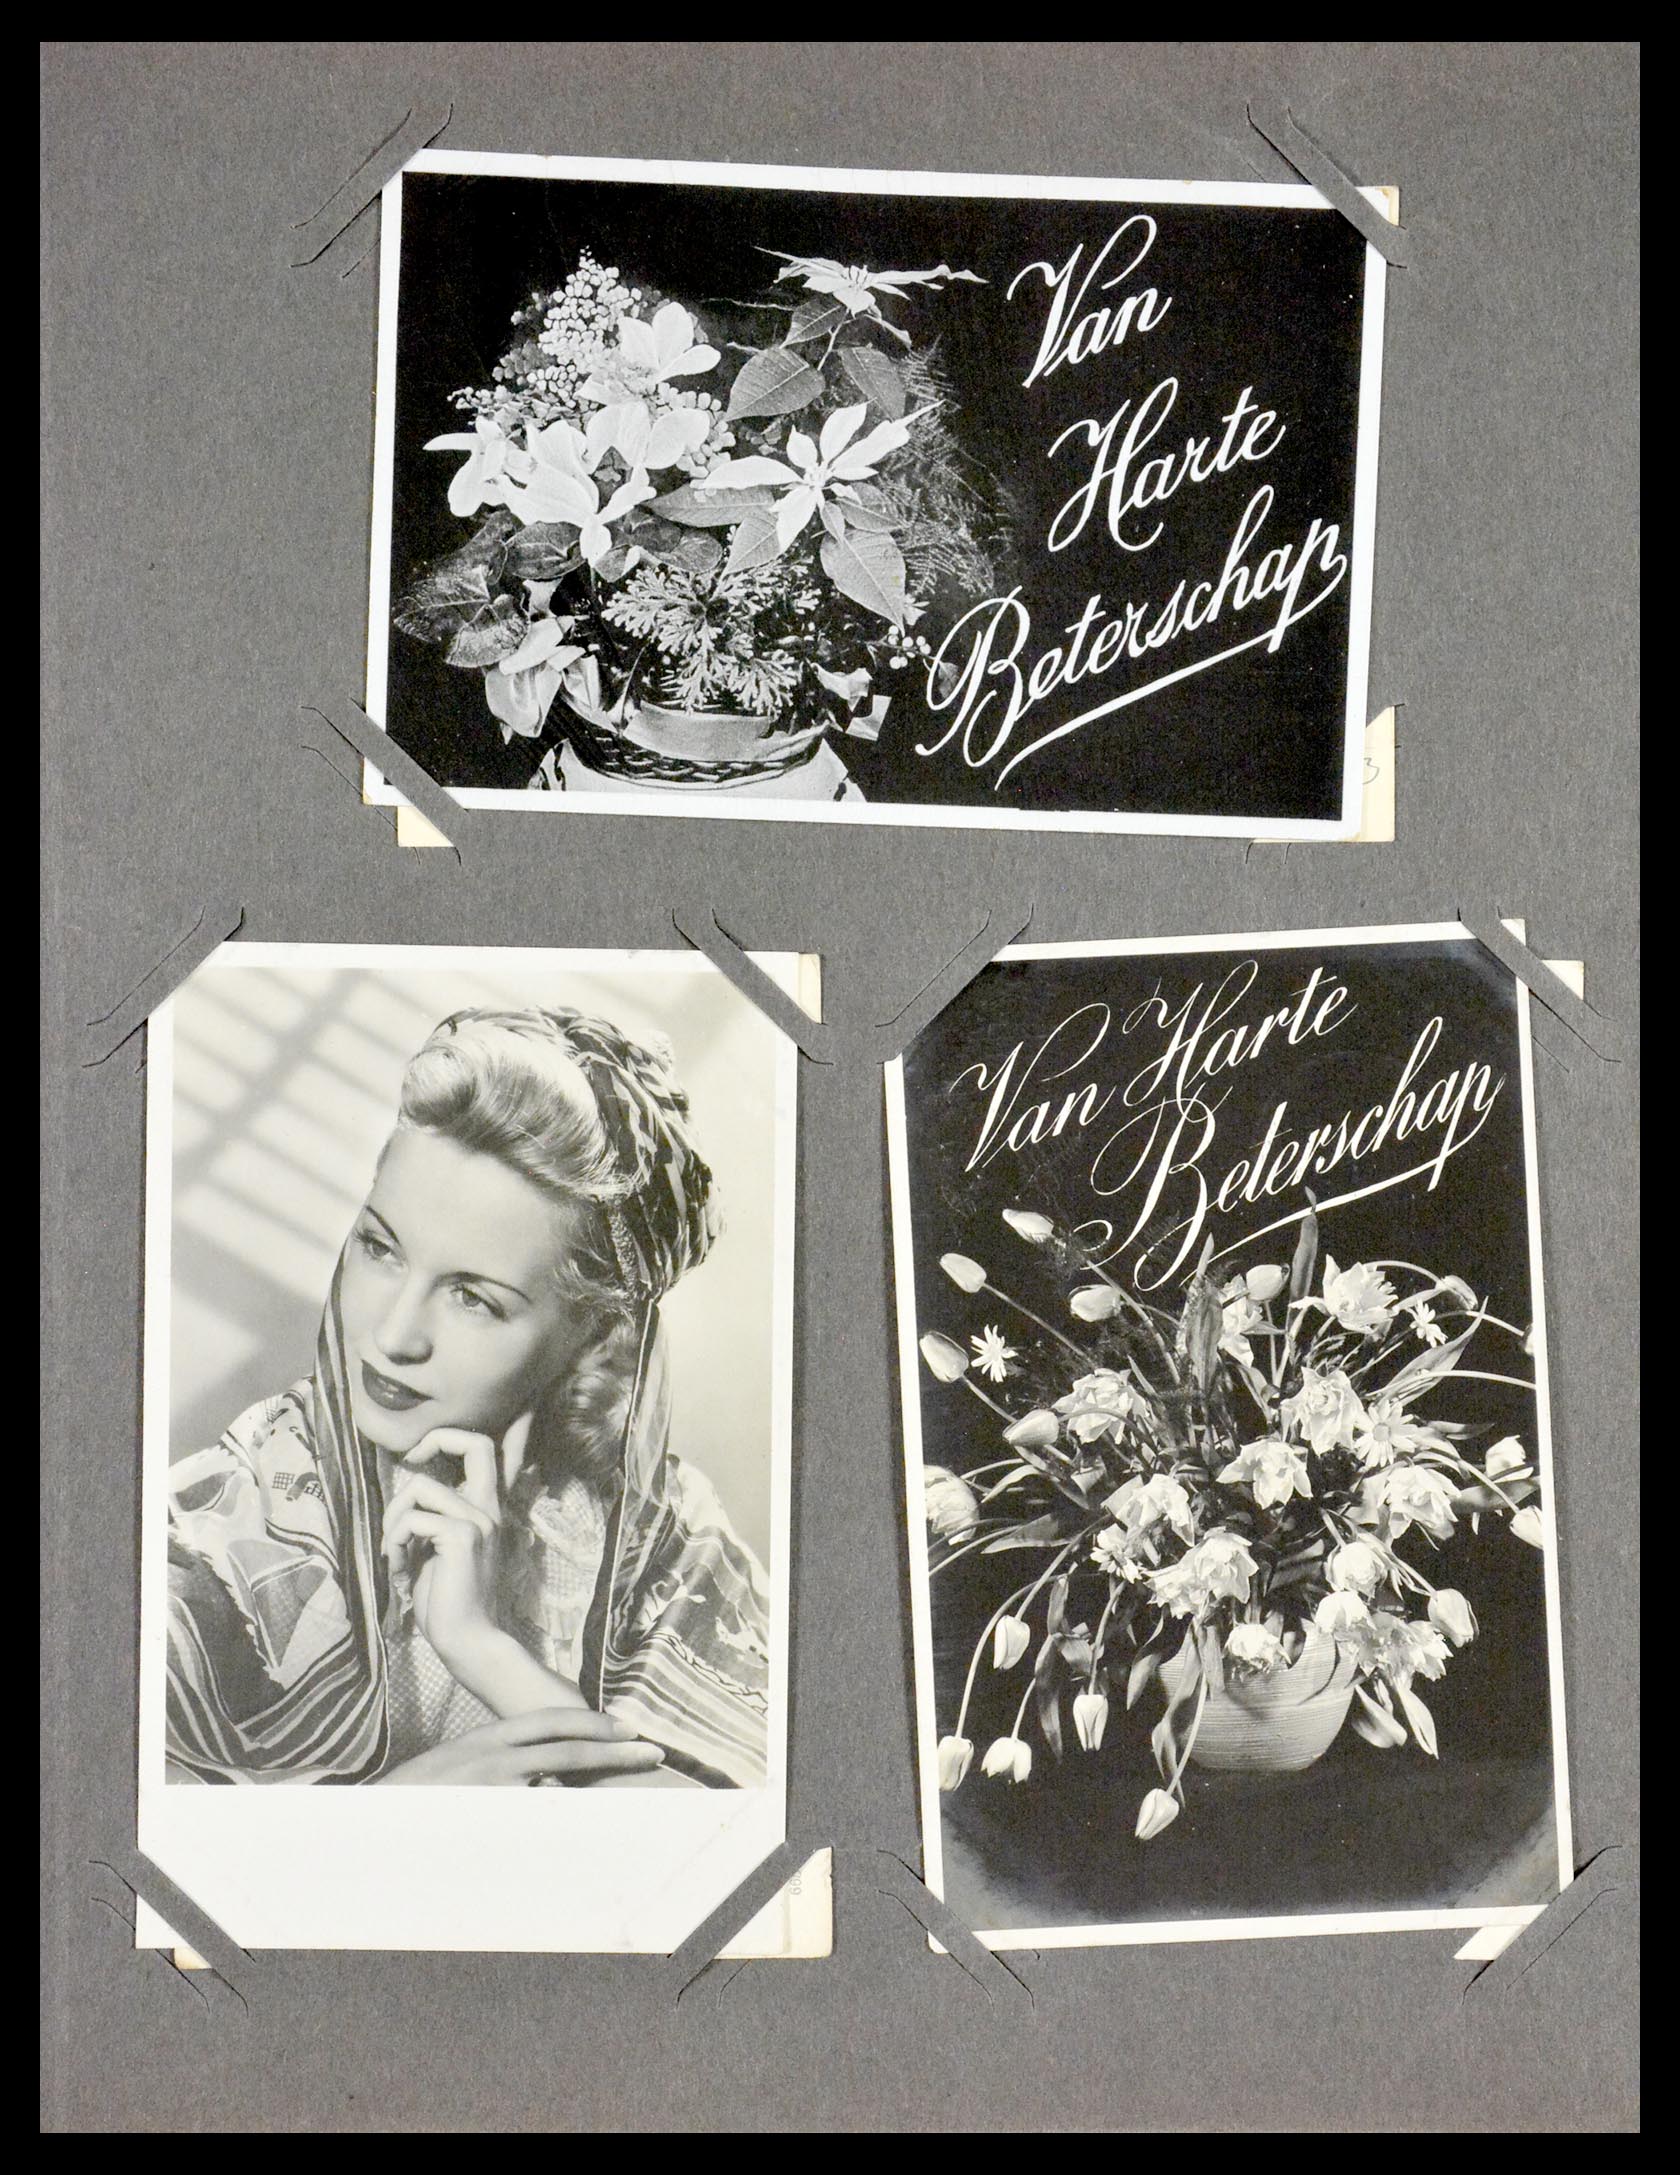 29518 040 - 29518 Netherlands picture postcards 1939-1940.